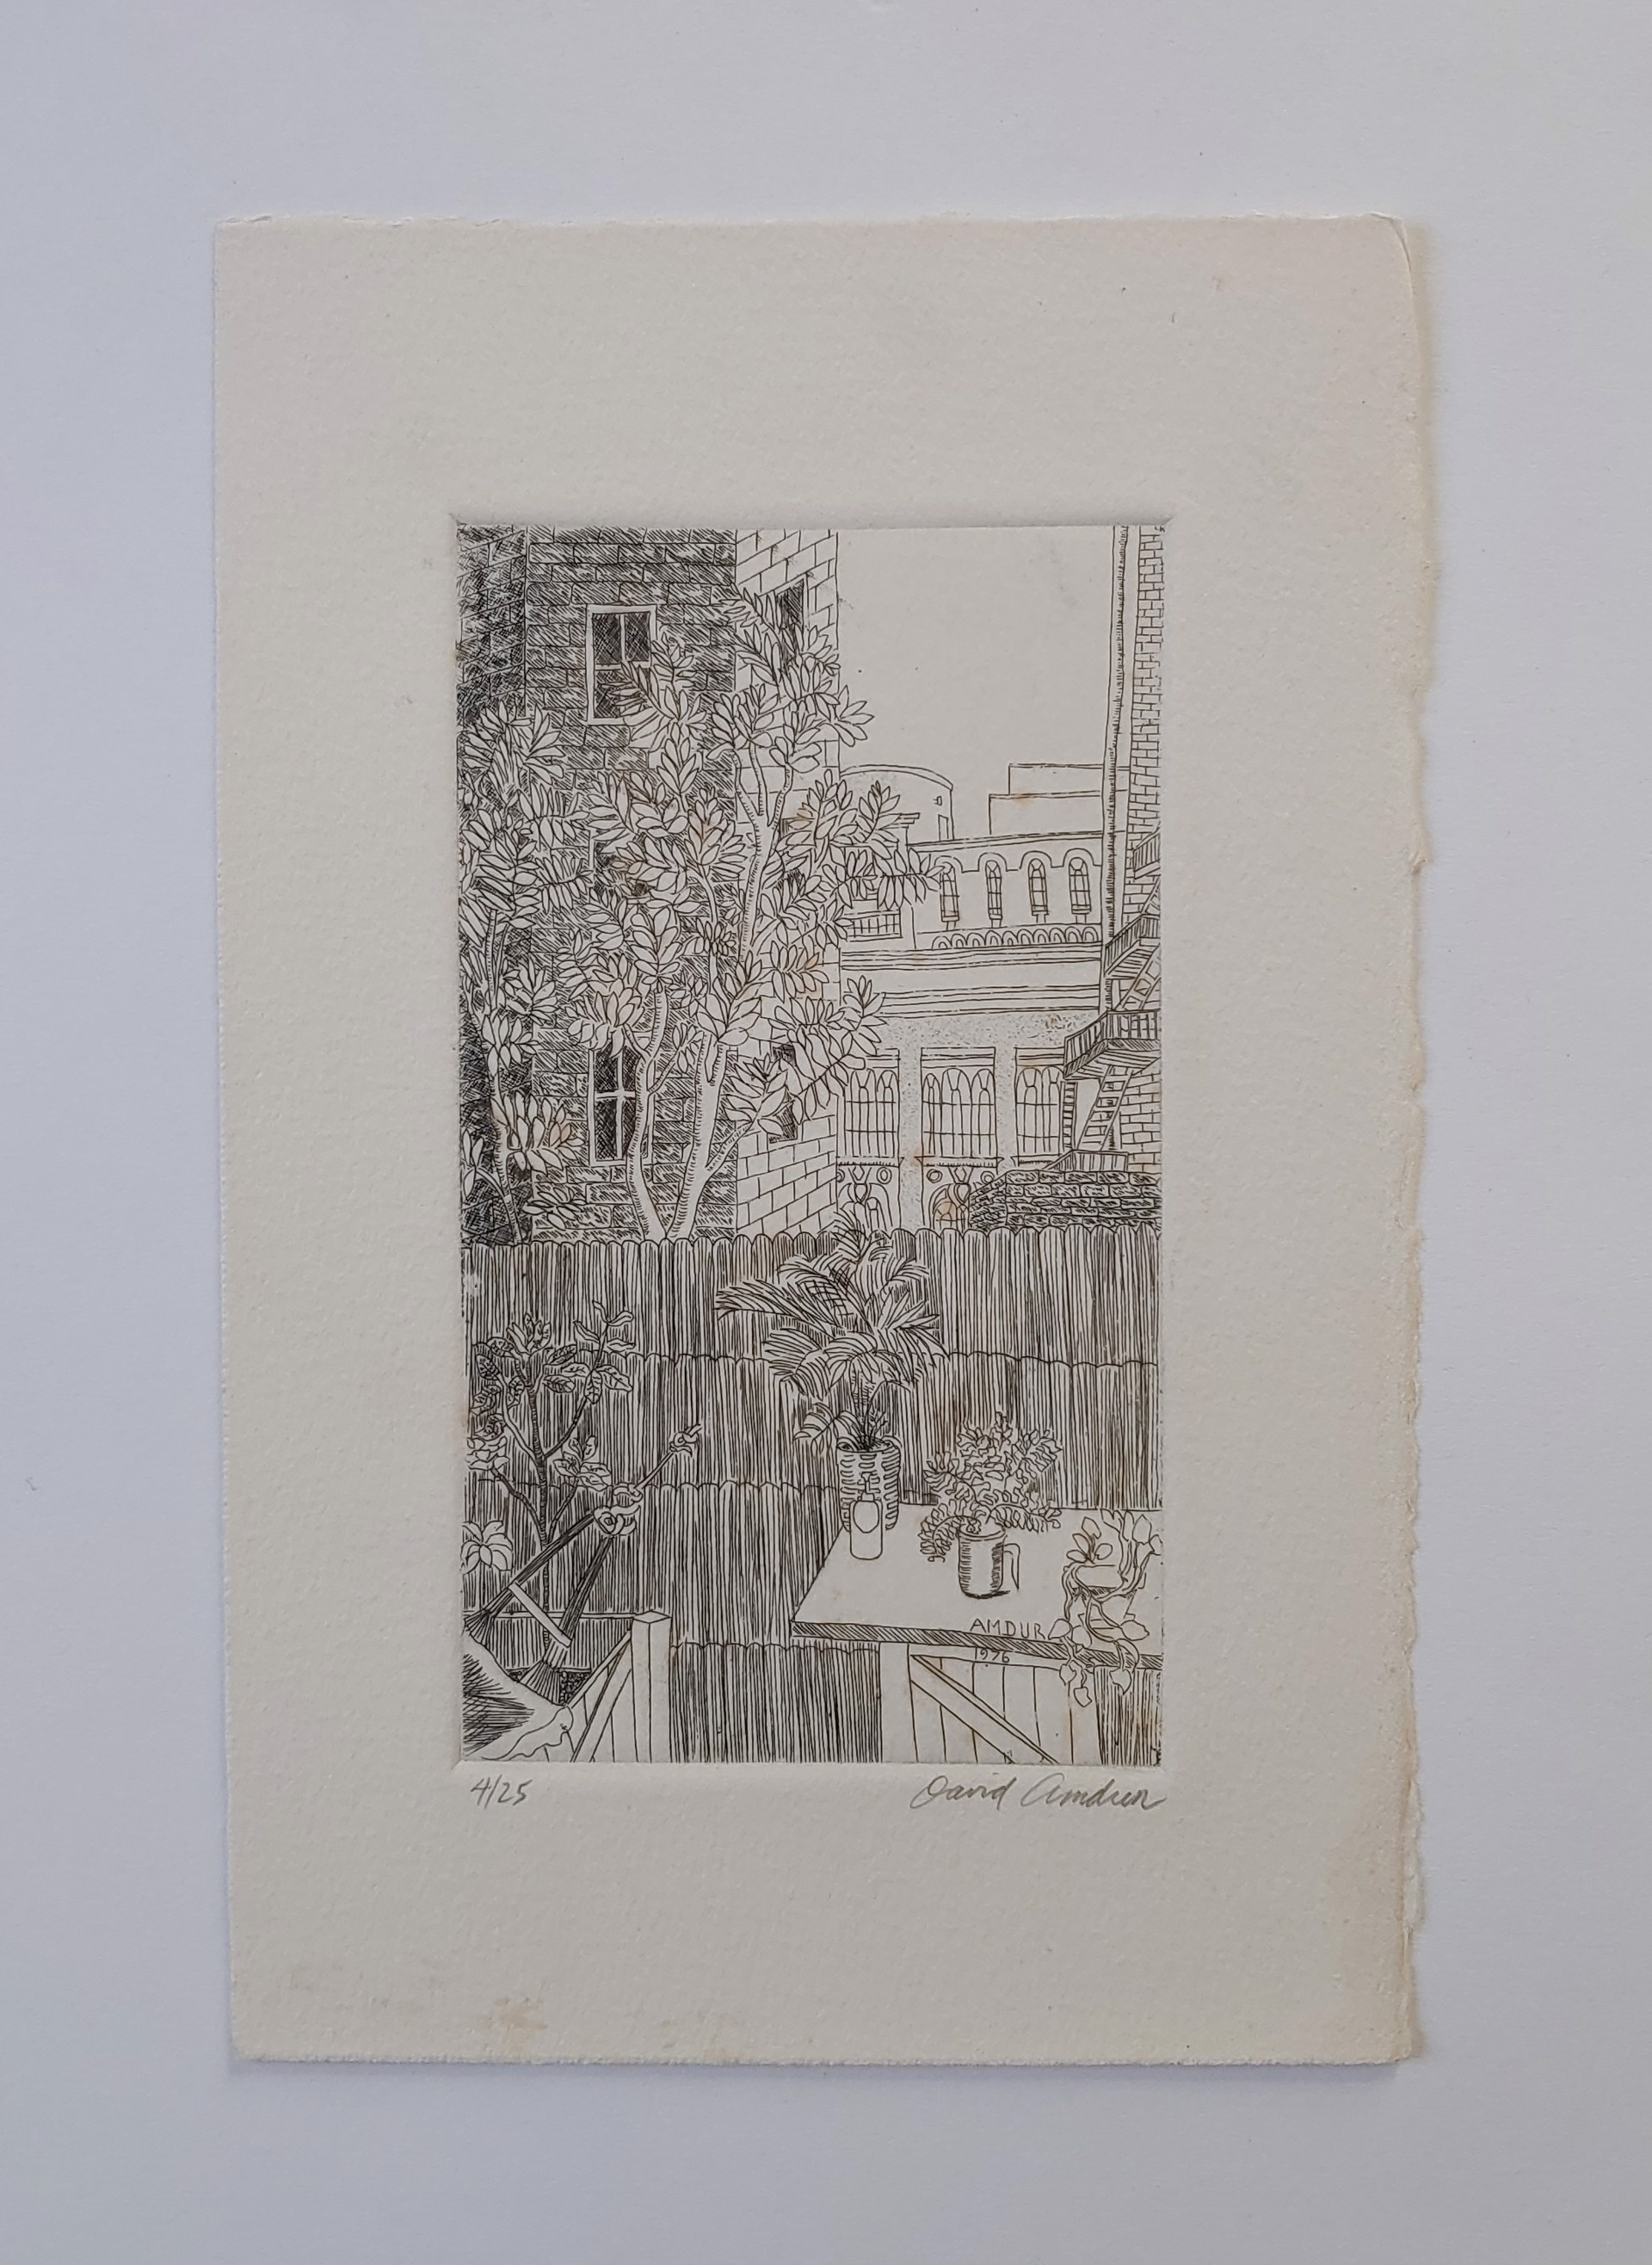 New York City Backyard (4/25) - Print, signed by David Amdur